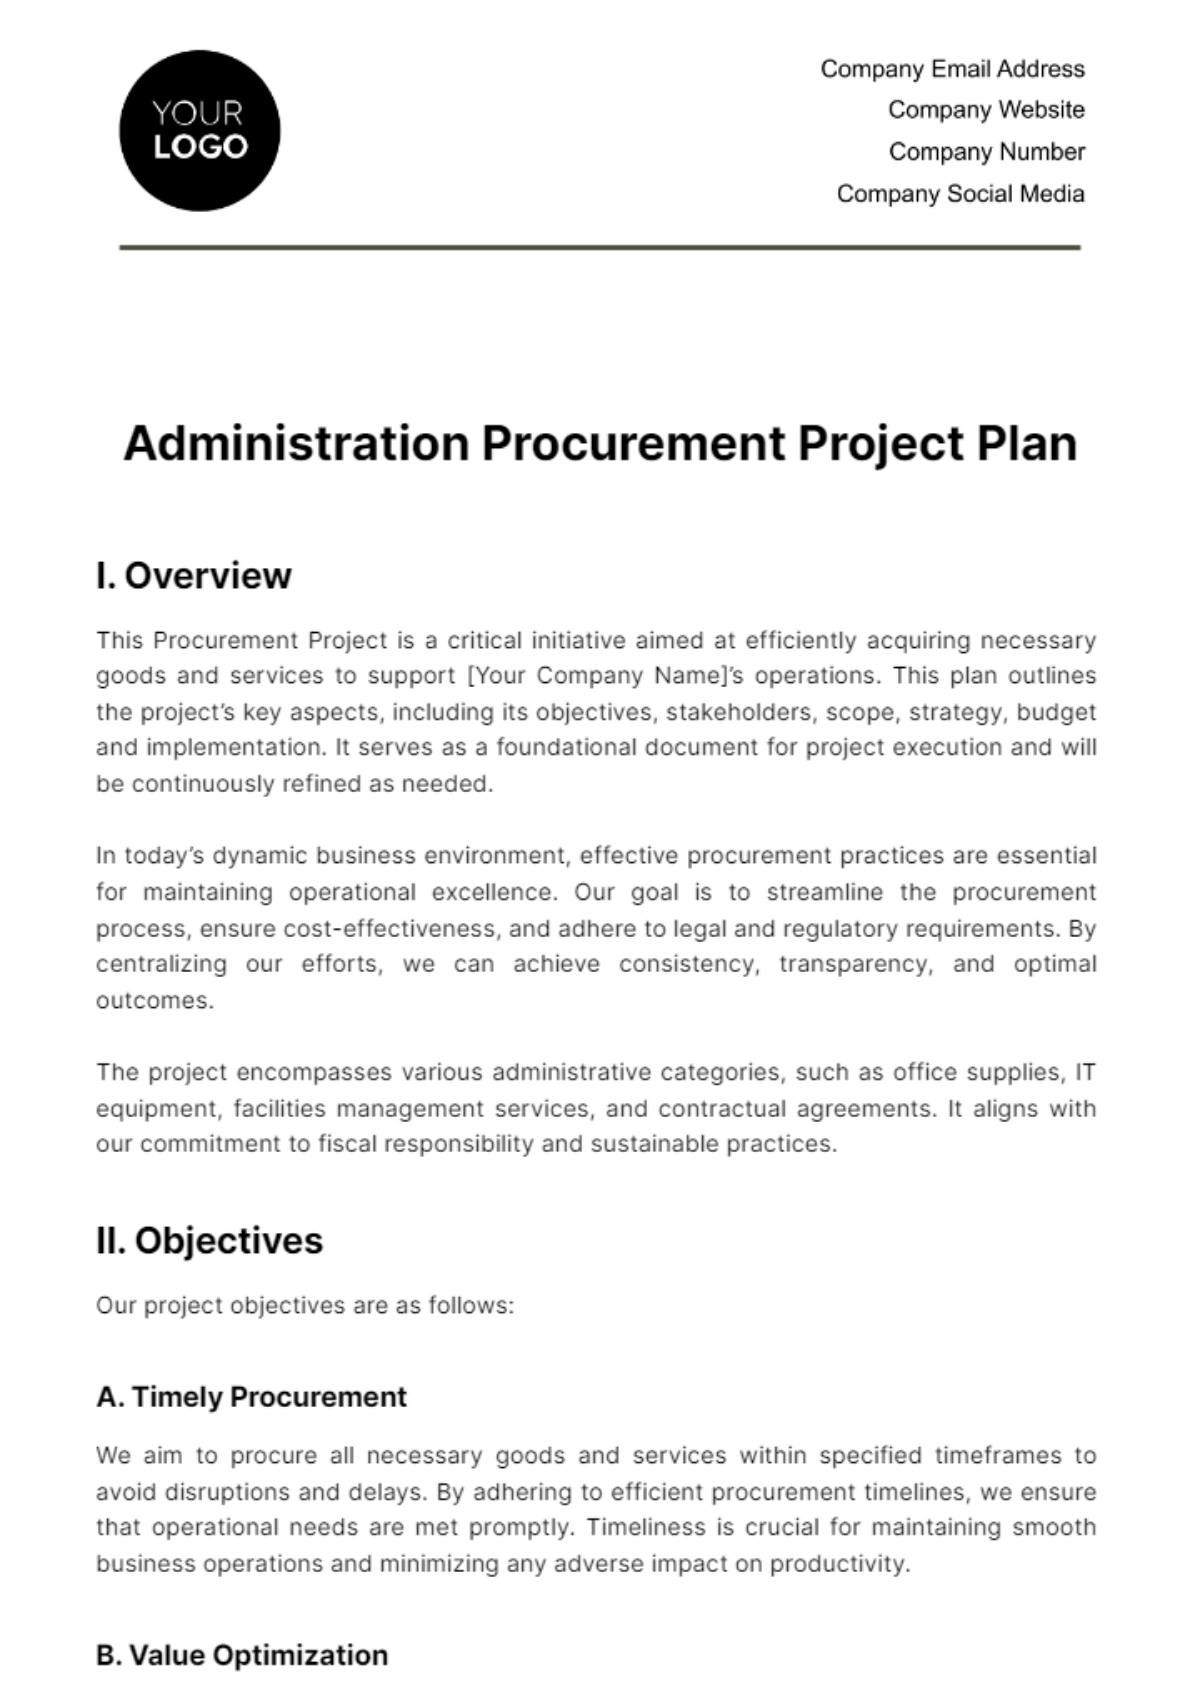 Administration Procurement Project Plan Template